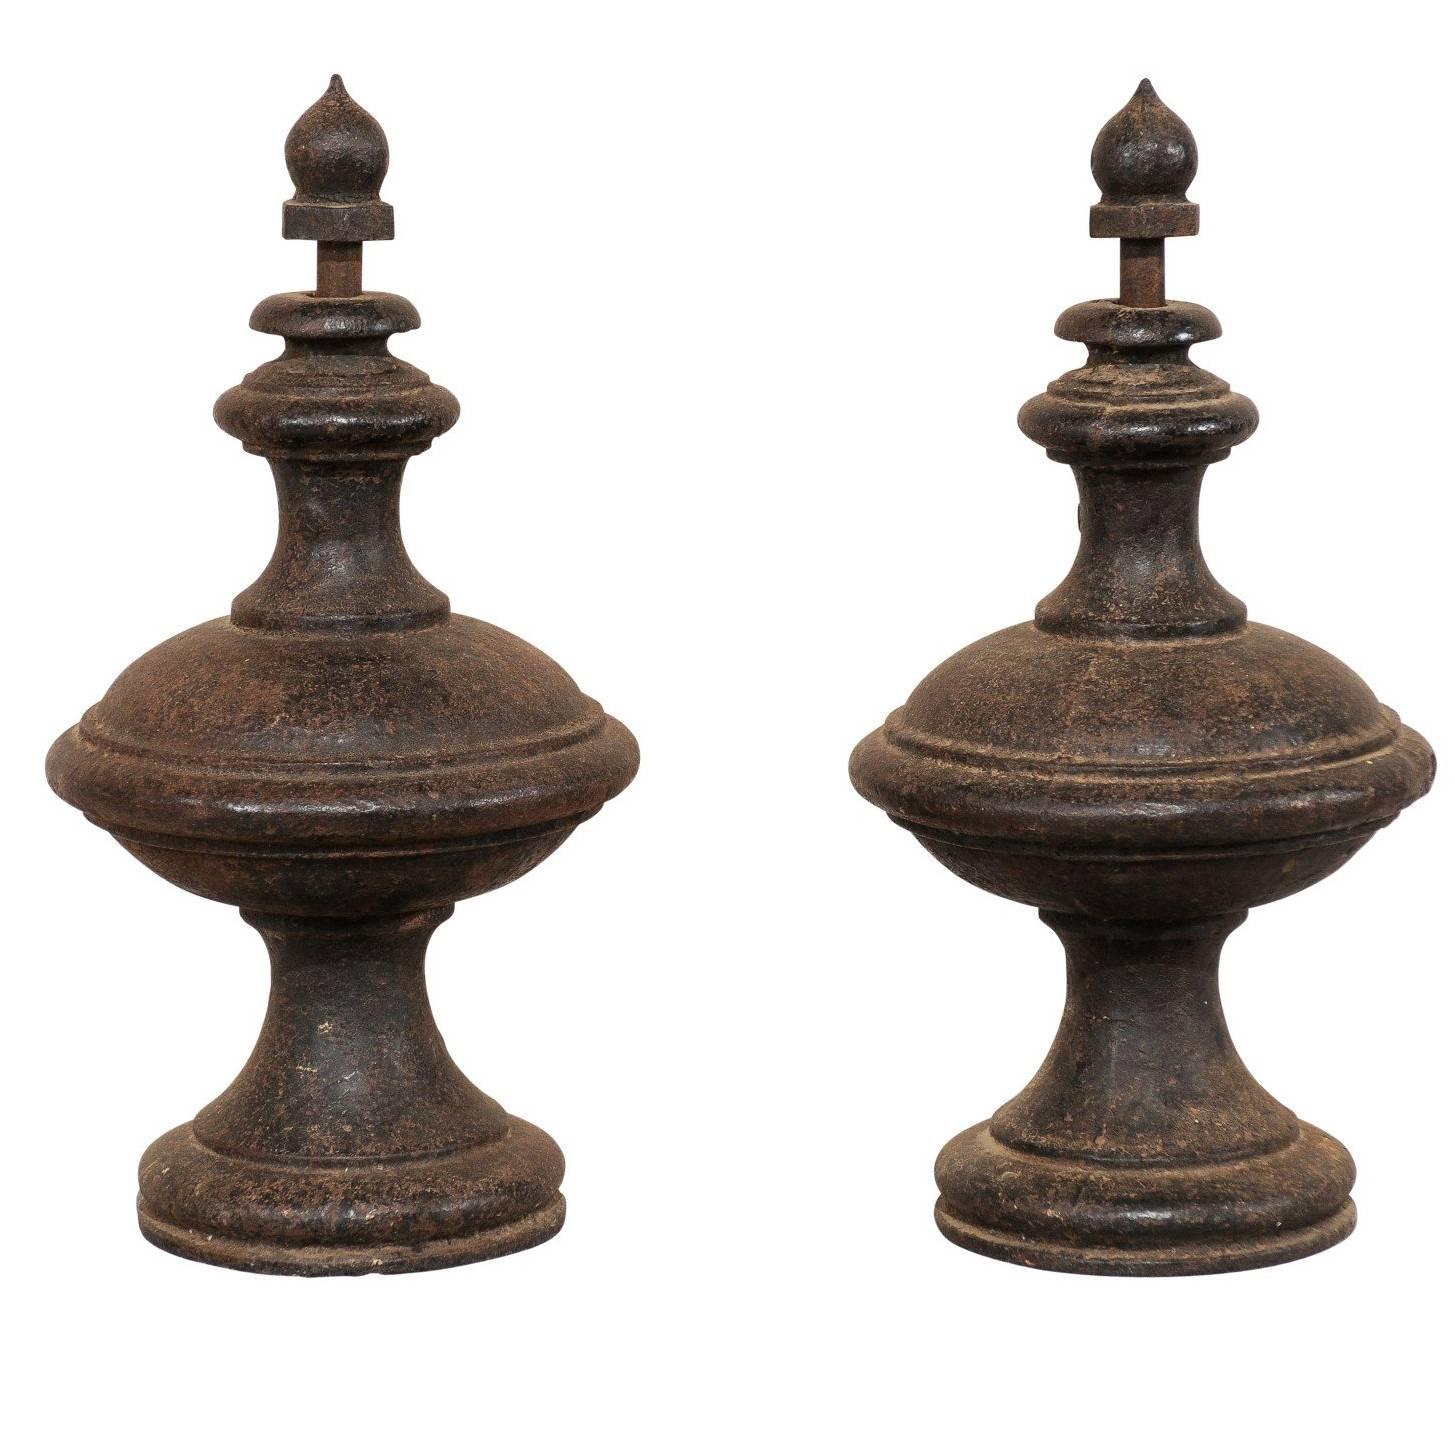 Pair of 19th Century European Cast Iron Finials with Beautiful Patina